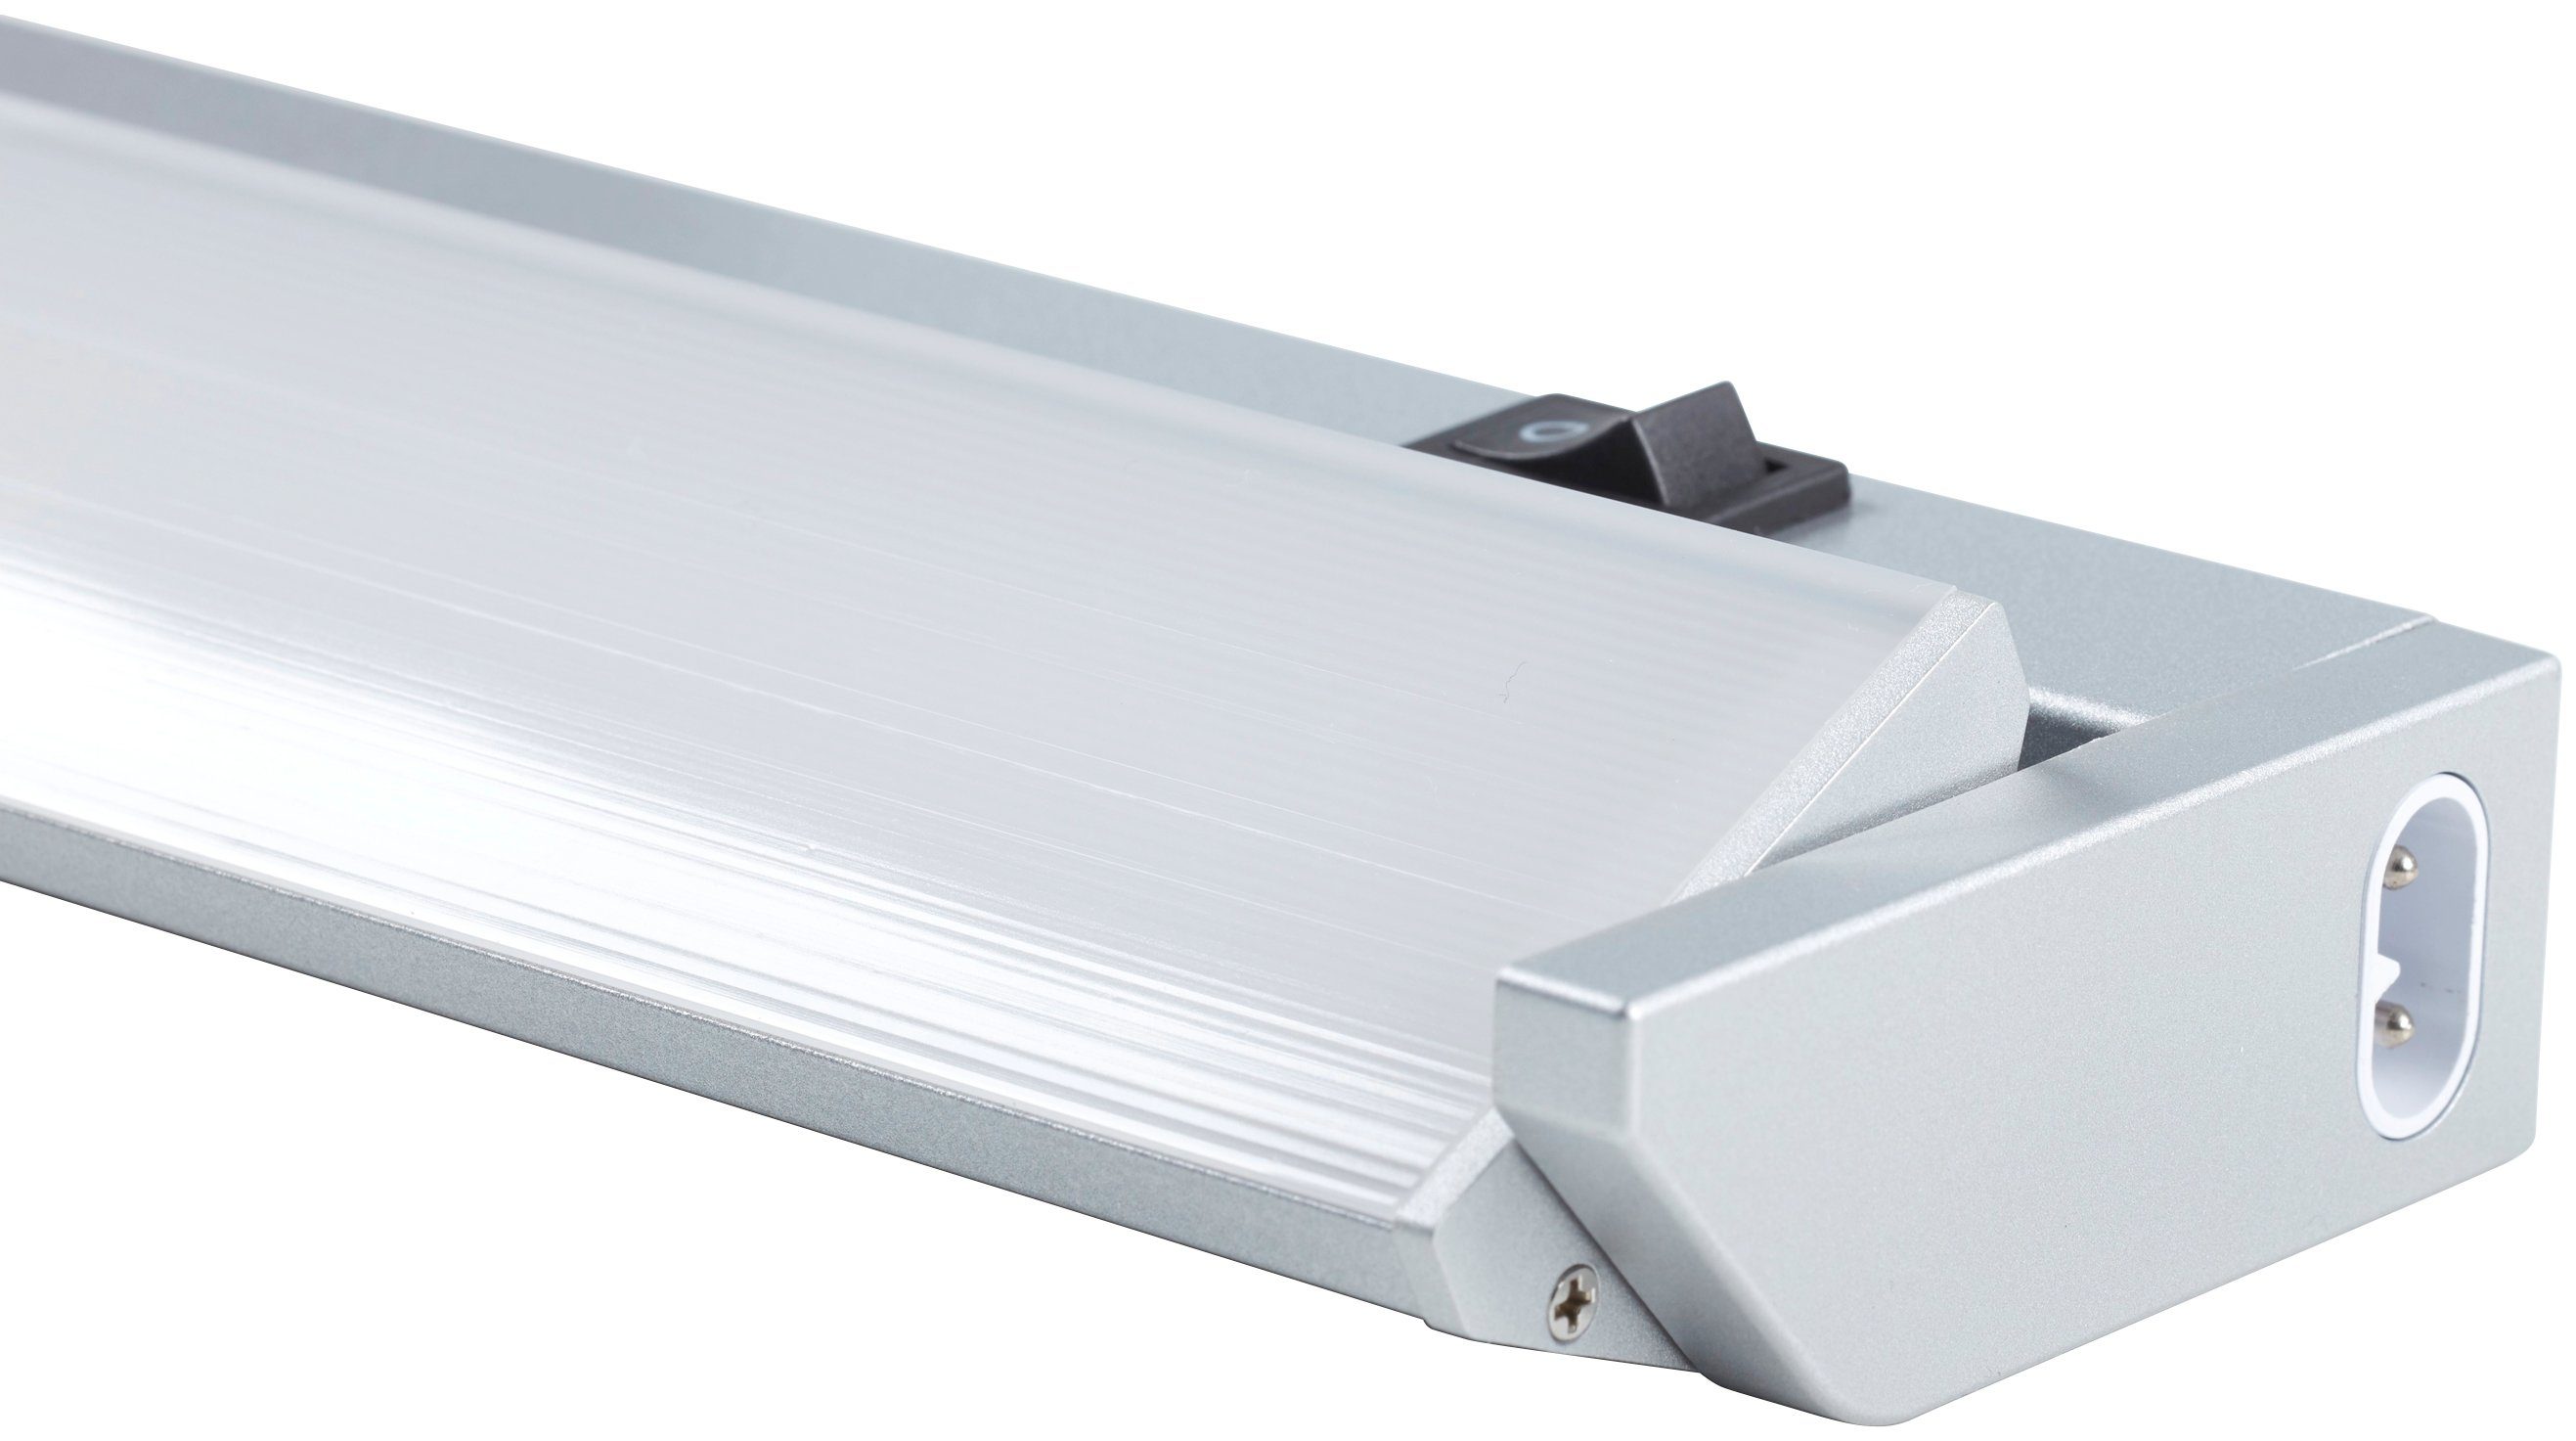 Loevschall LED Unterbauleuchte integriert, Ein-/Ausschalter, Neutralweiß, LED schwenkbar Lichtausbeute, LED Hohe Striplight 579mm, fest